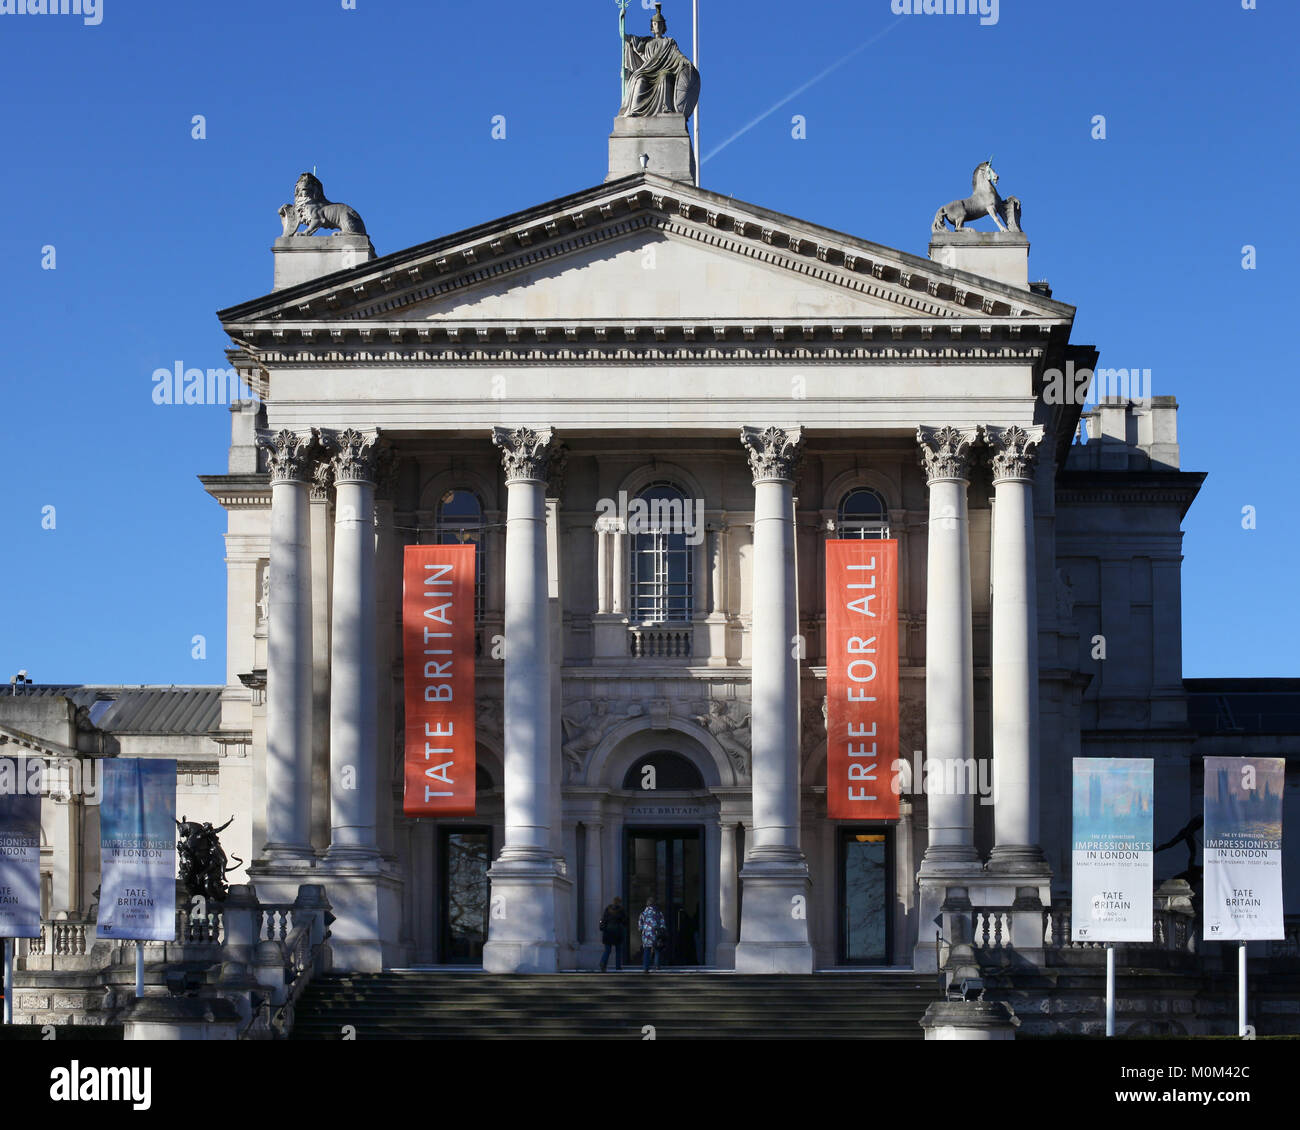 Tate Britain art gallery in London, England, Britain Stock Photo